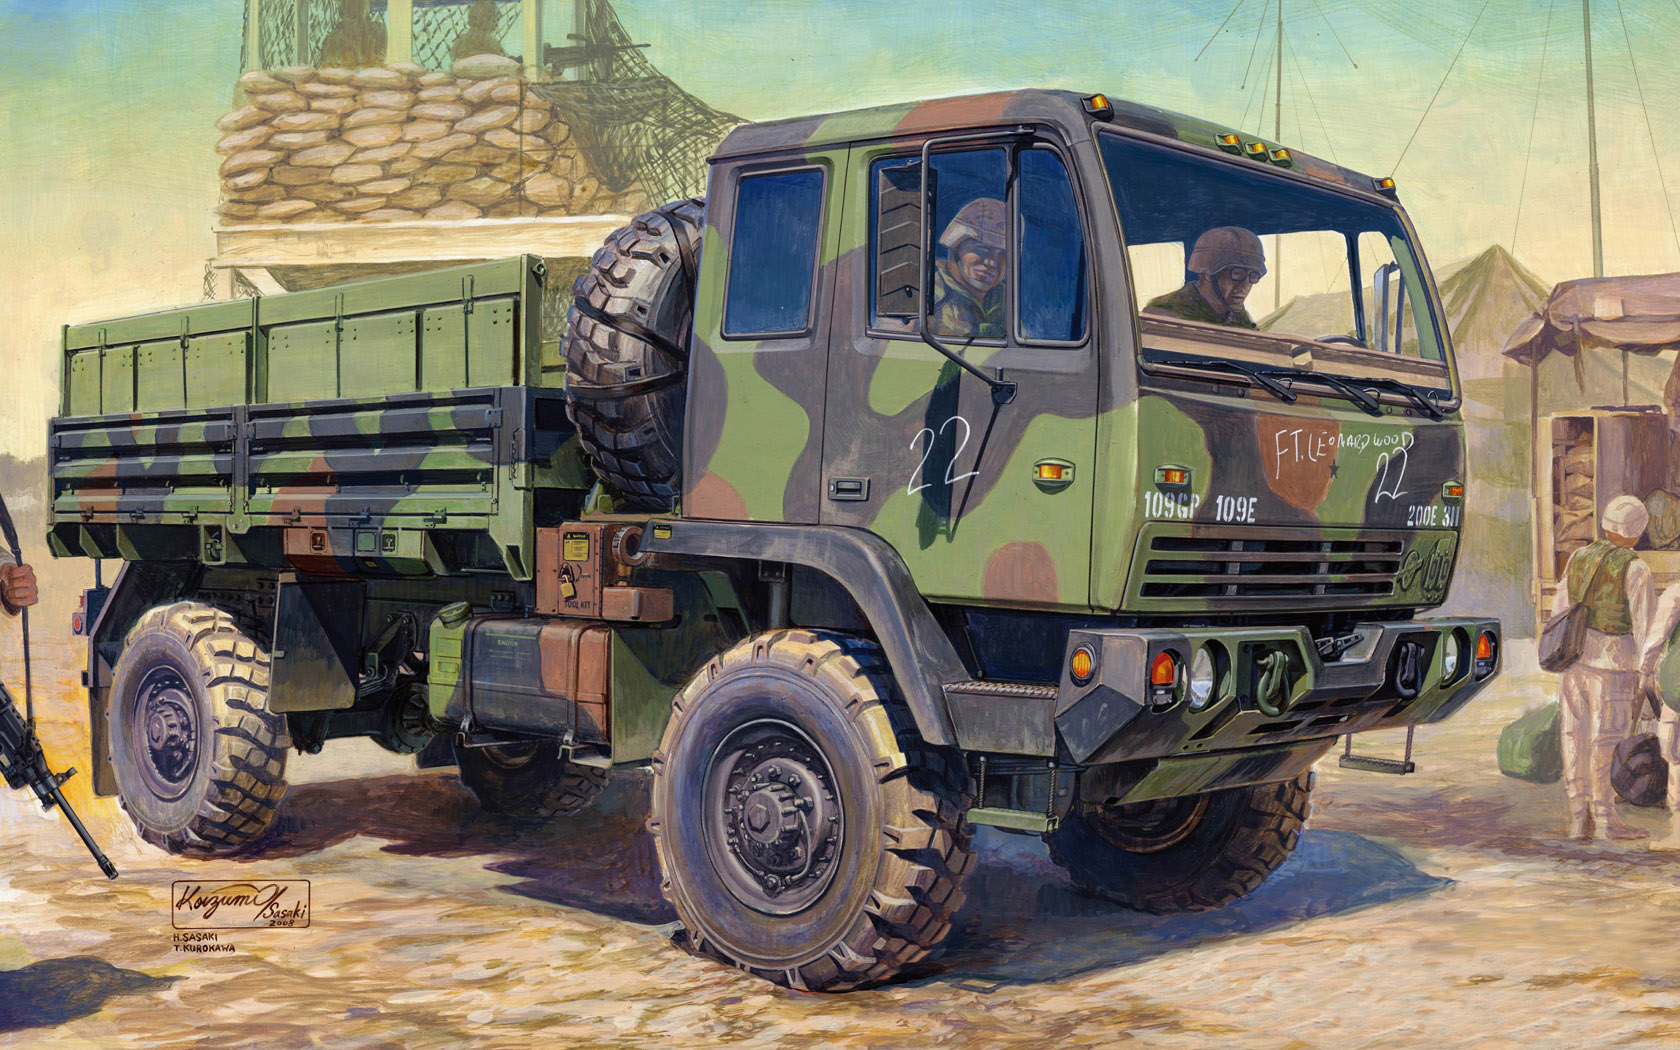 General 1680x1050 van car army military military vehicle artwork soldier men helmet uniform gun